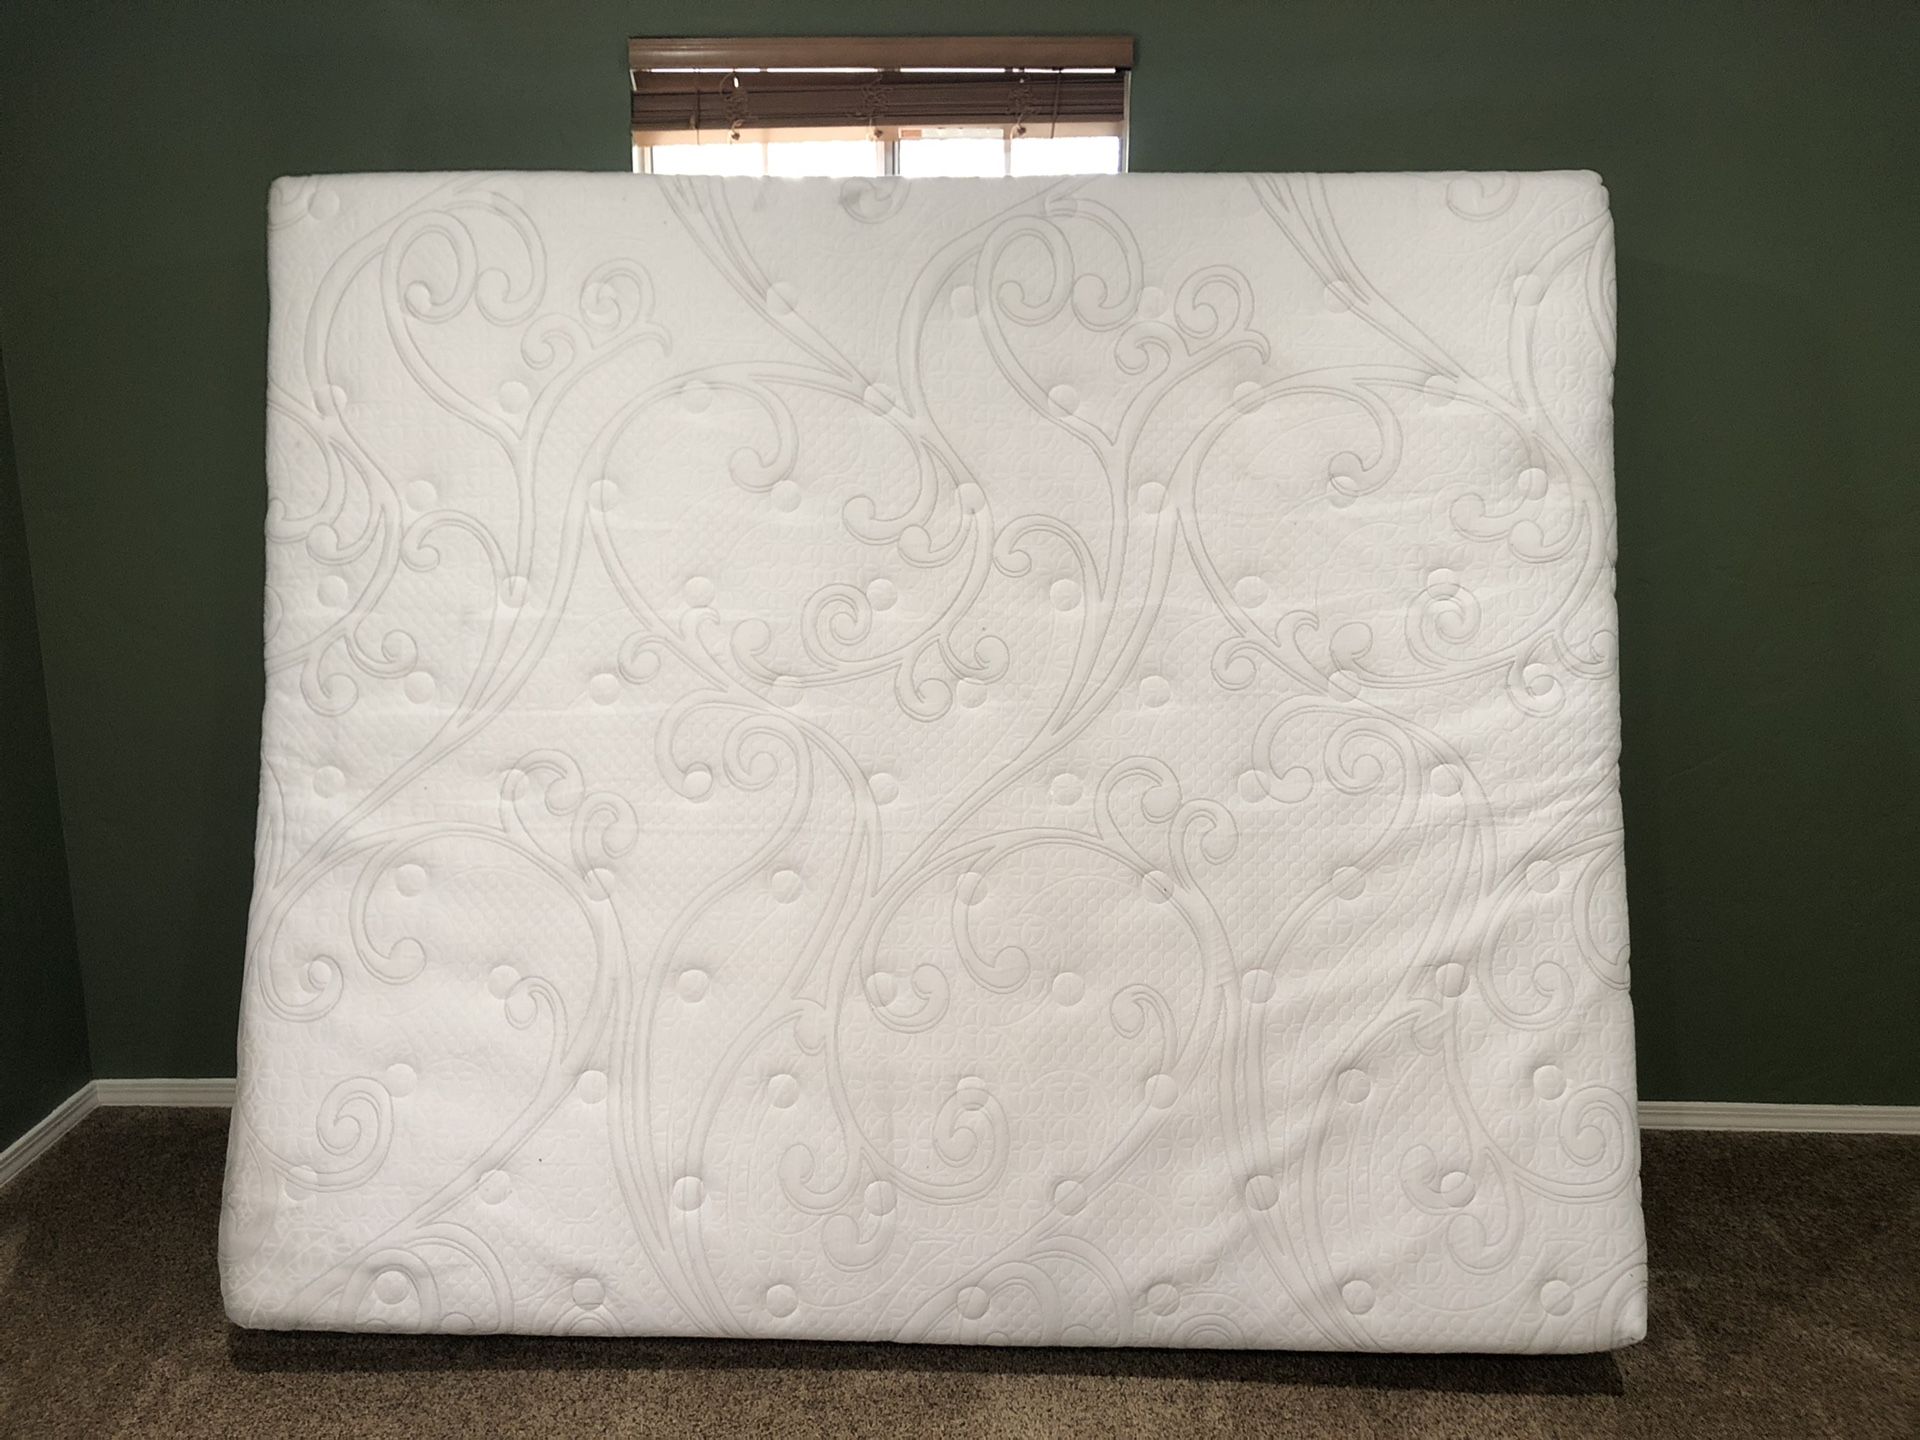 mattress model number 4632 ah cape cod plush